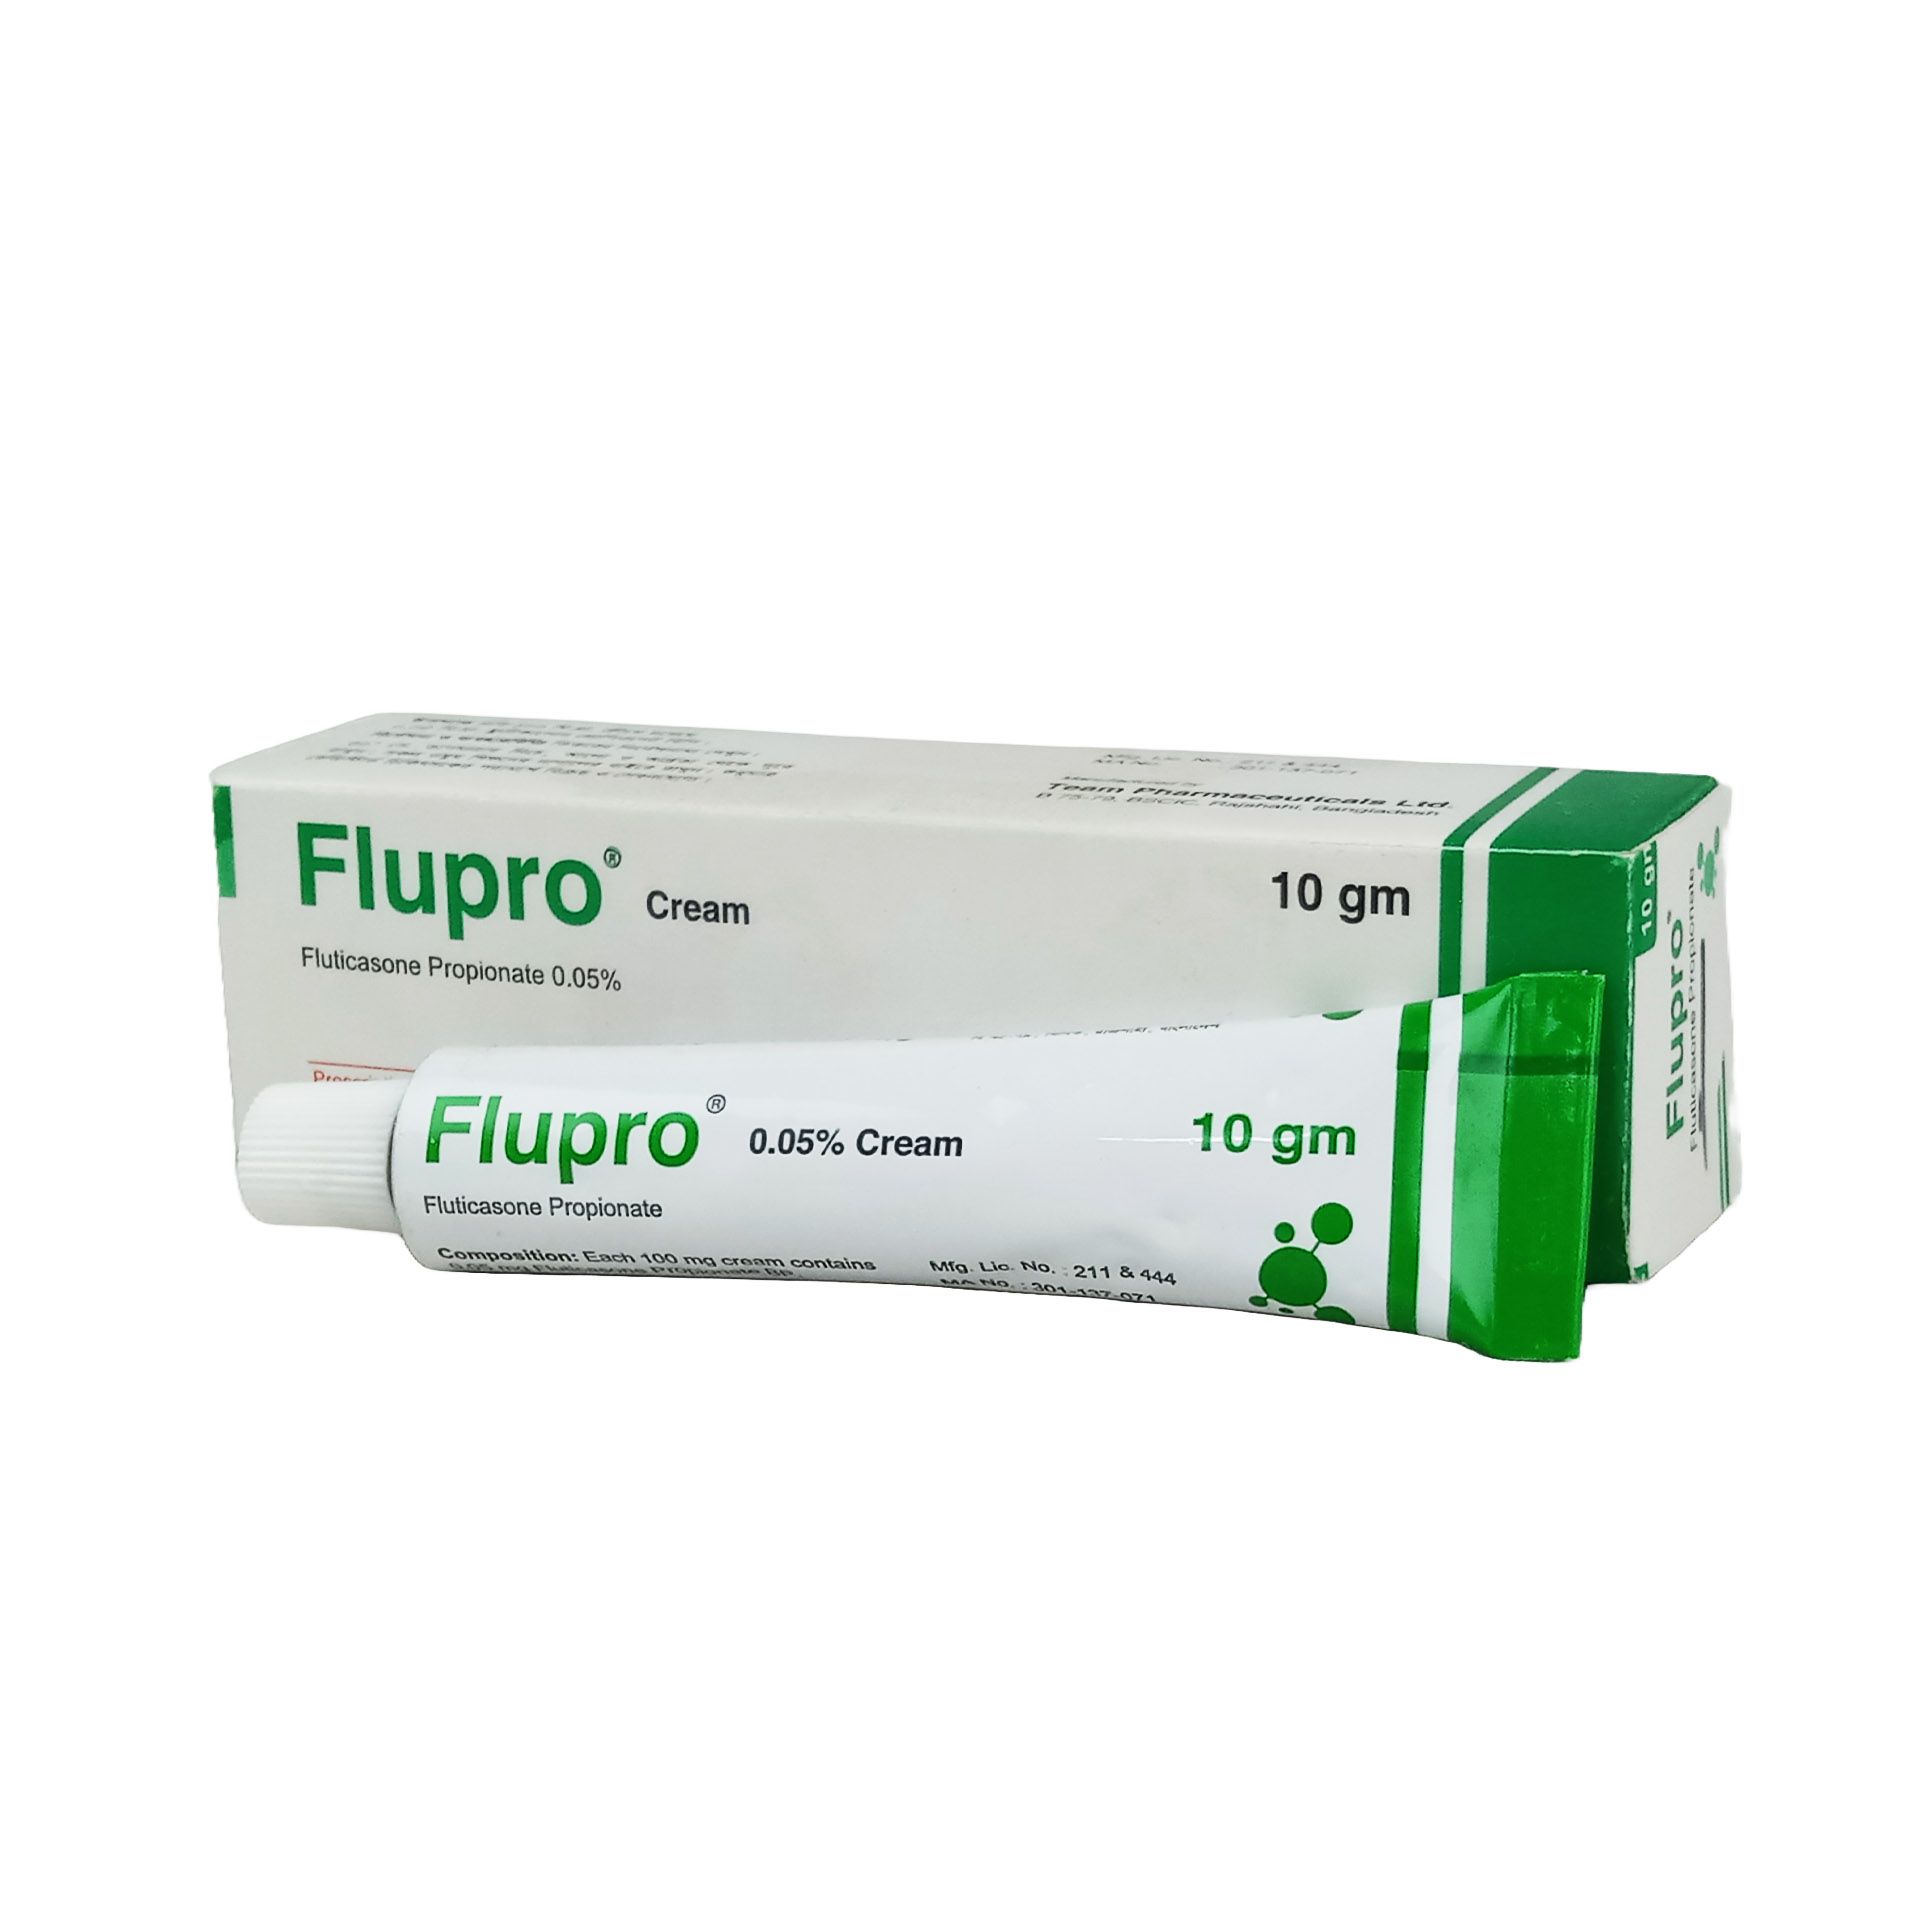 Flupro 0.05% Cream